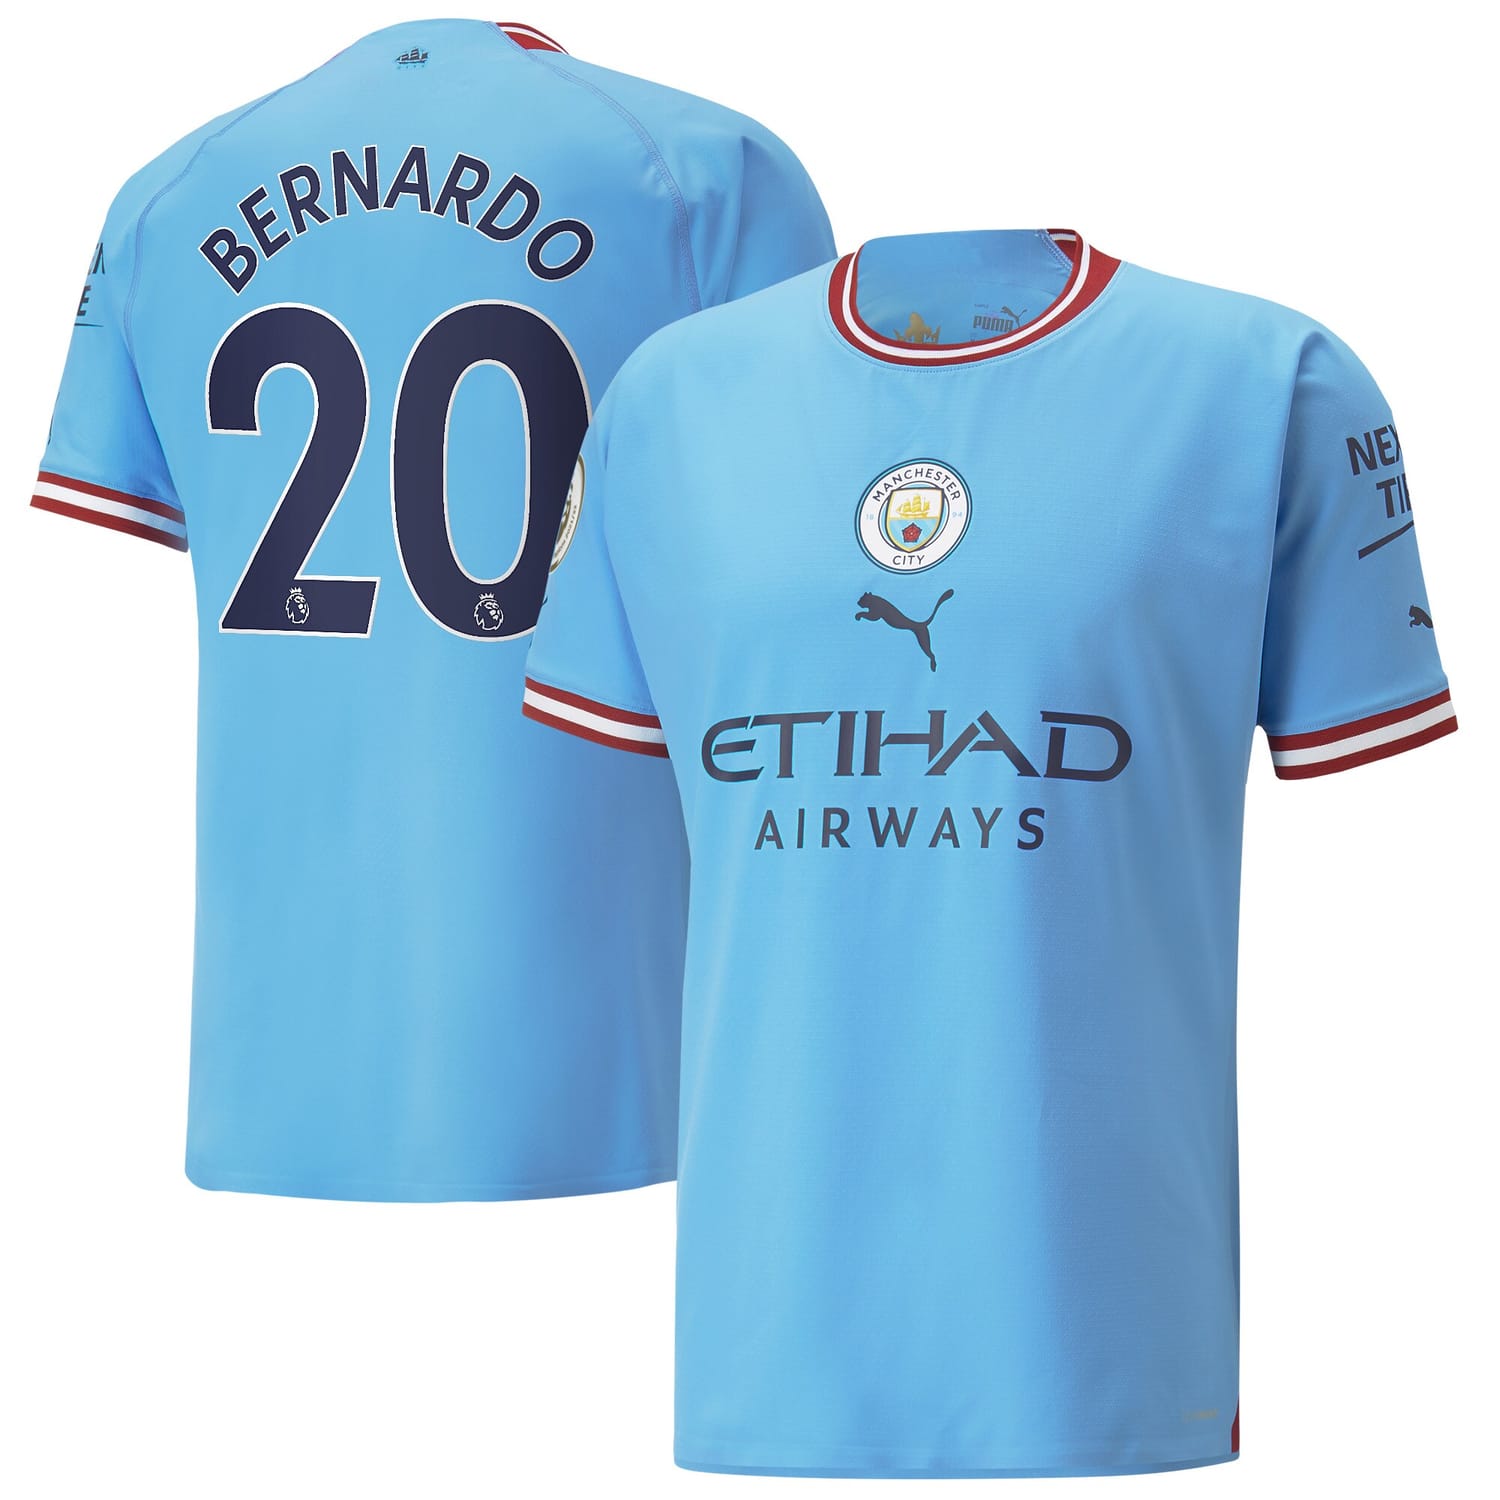 Premier League Manchester City Home Authentic Jersey Shirt Light Blue 2022-23 player Bernardo Silva printing for Men